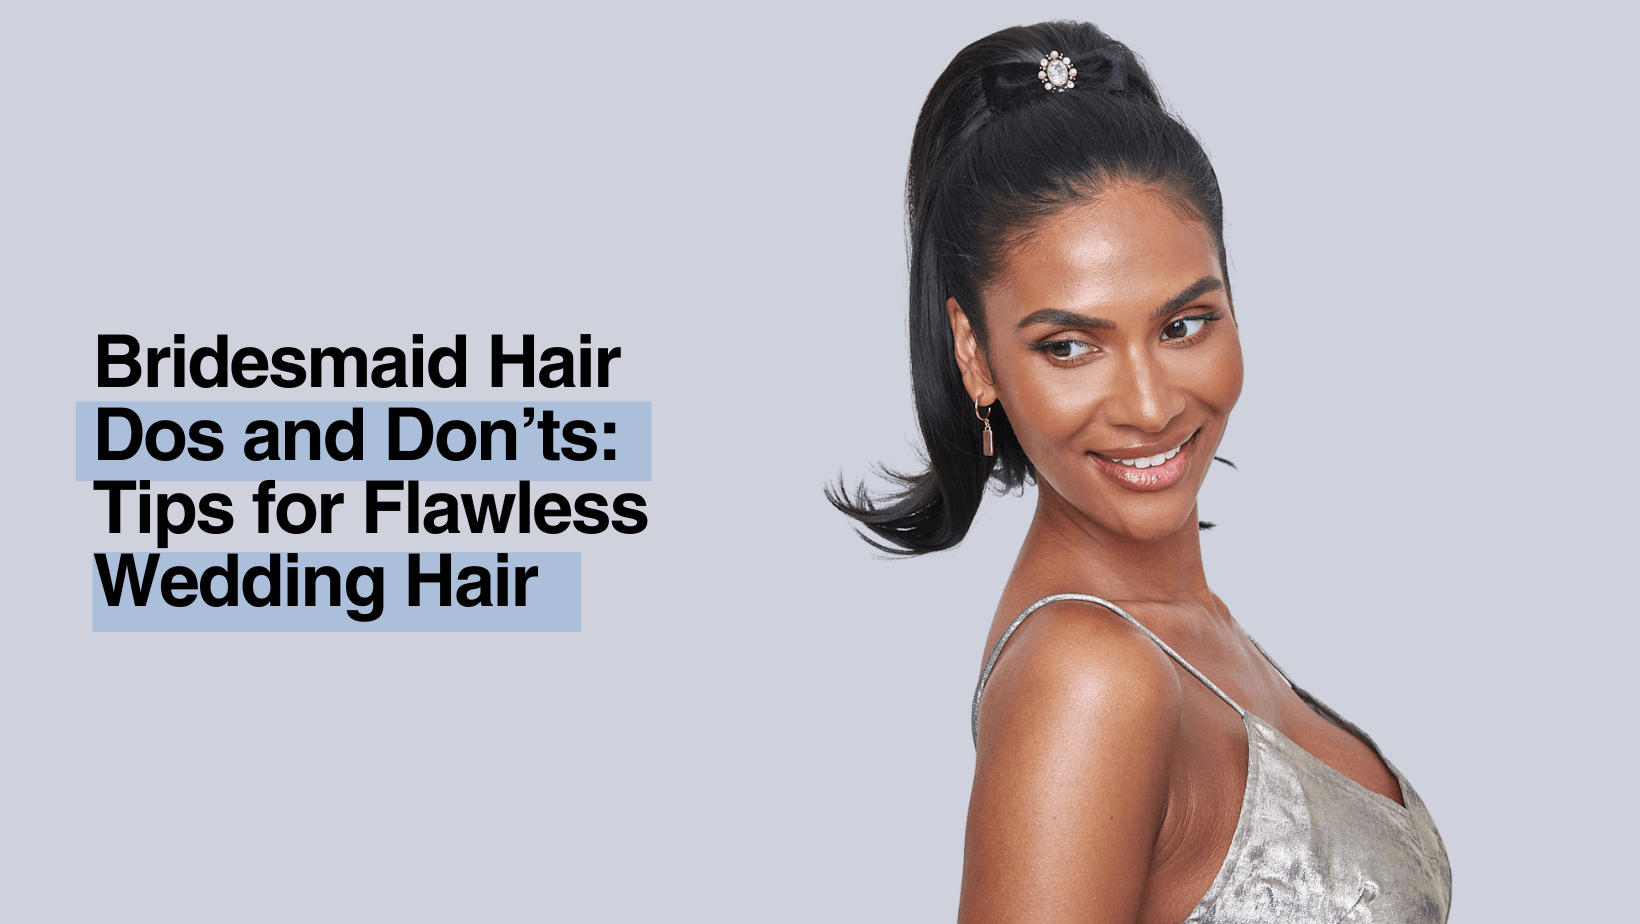 Bridesmaid Hair Dos and Don'ts: Tips for Flawless Wedding Hair